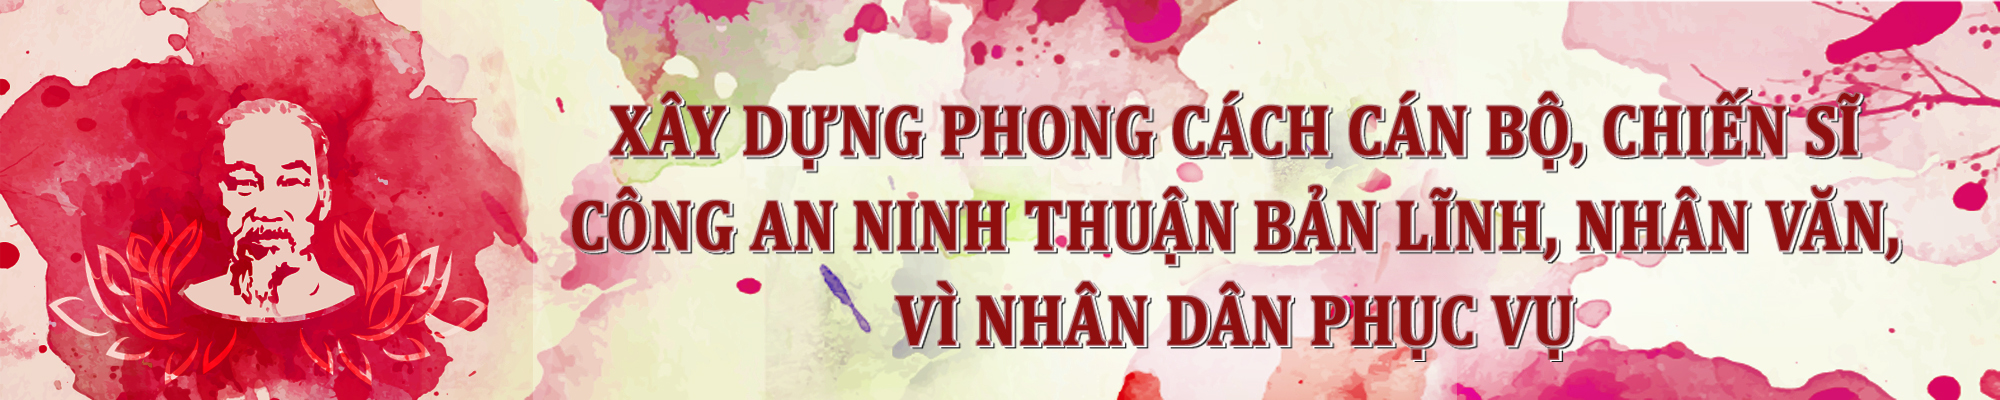 https://congan.ninhthuan.gov.vn/portal/Pages/Phongcach-nguoi-CAND.aspx